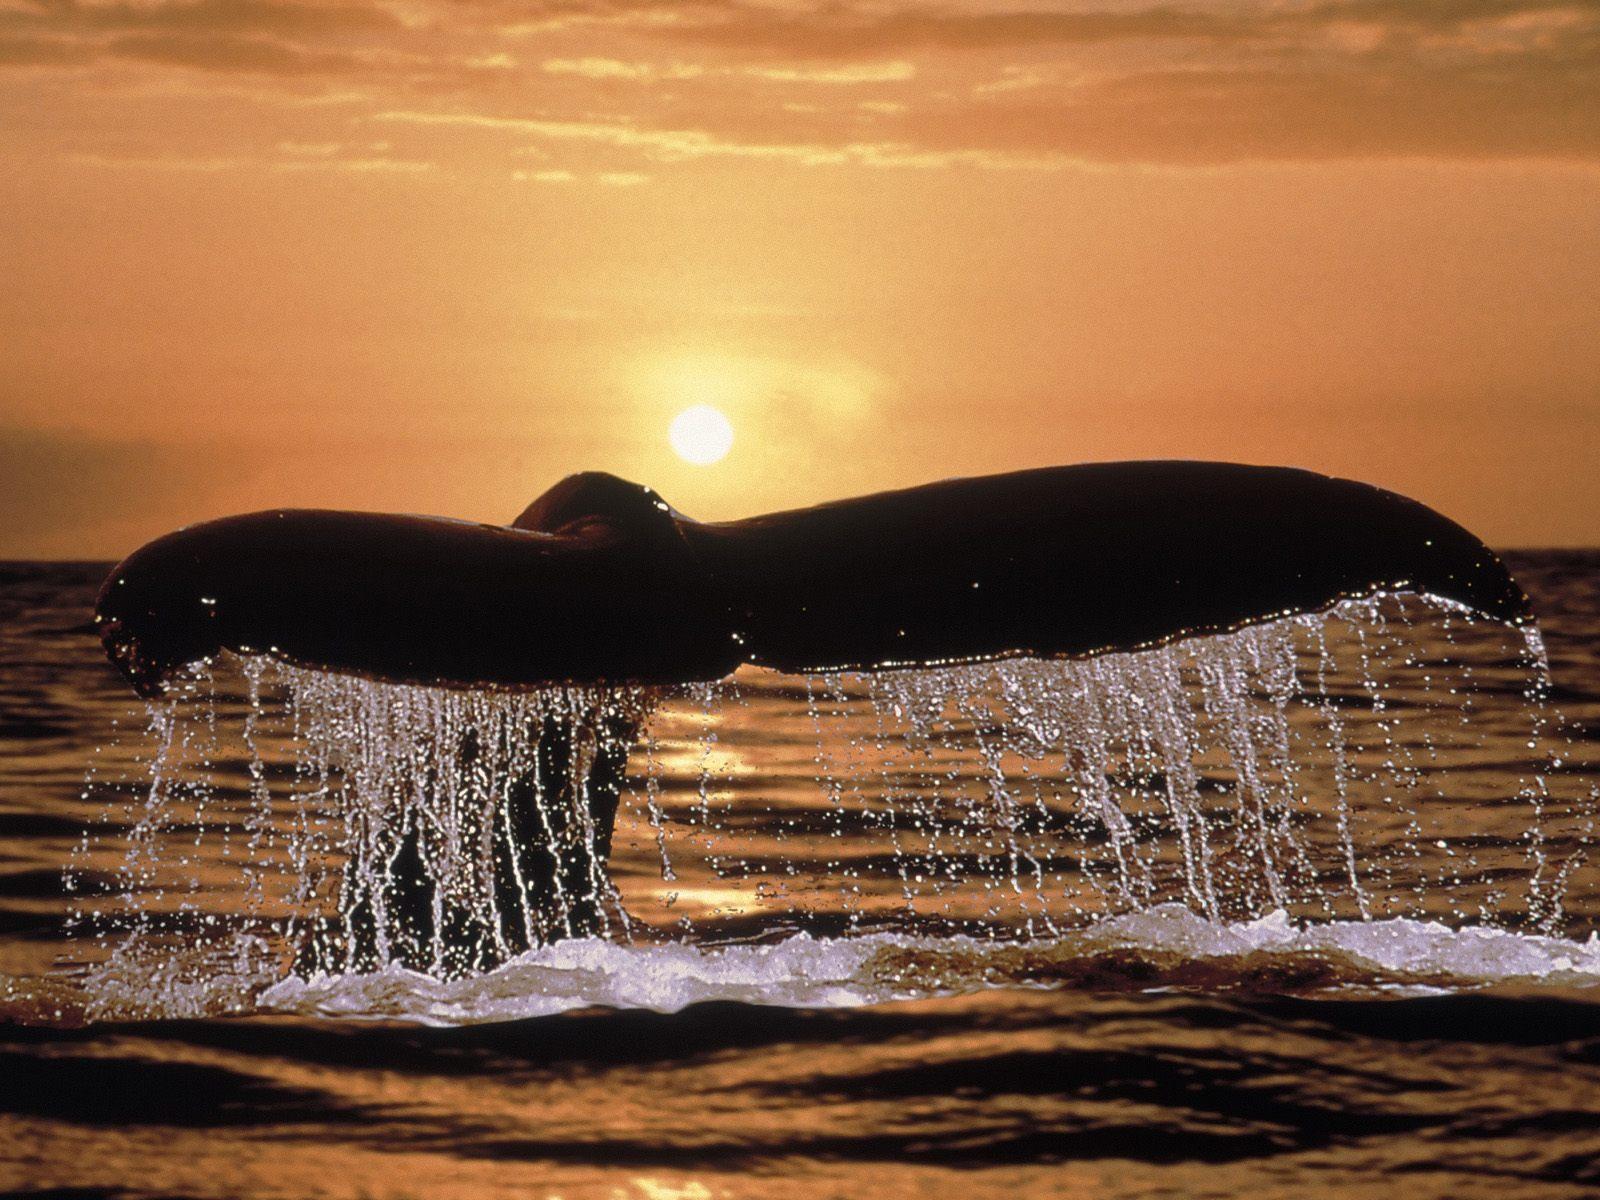 Humpback whale in ocean free desktop background wallpaper image